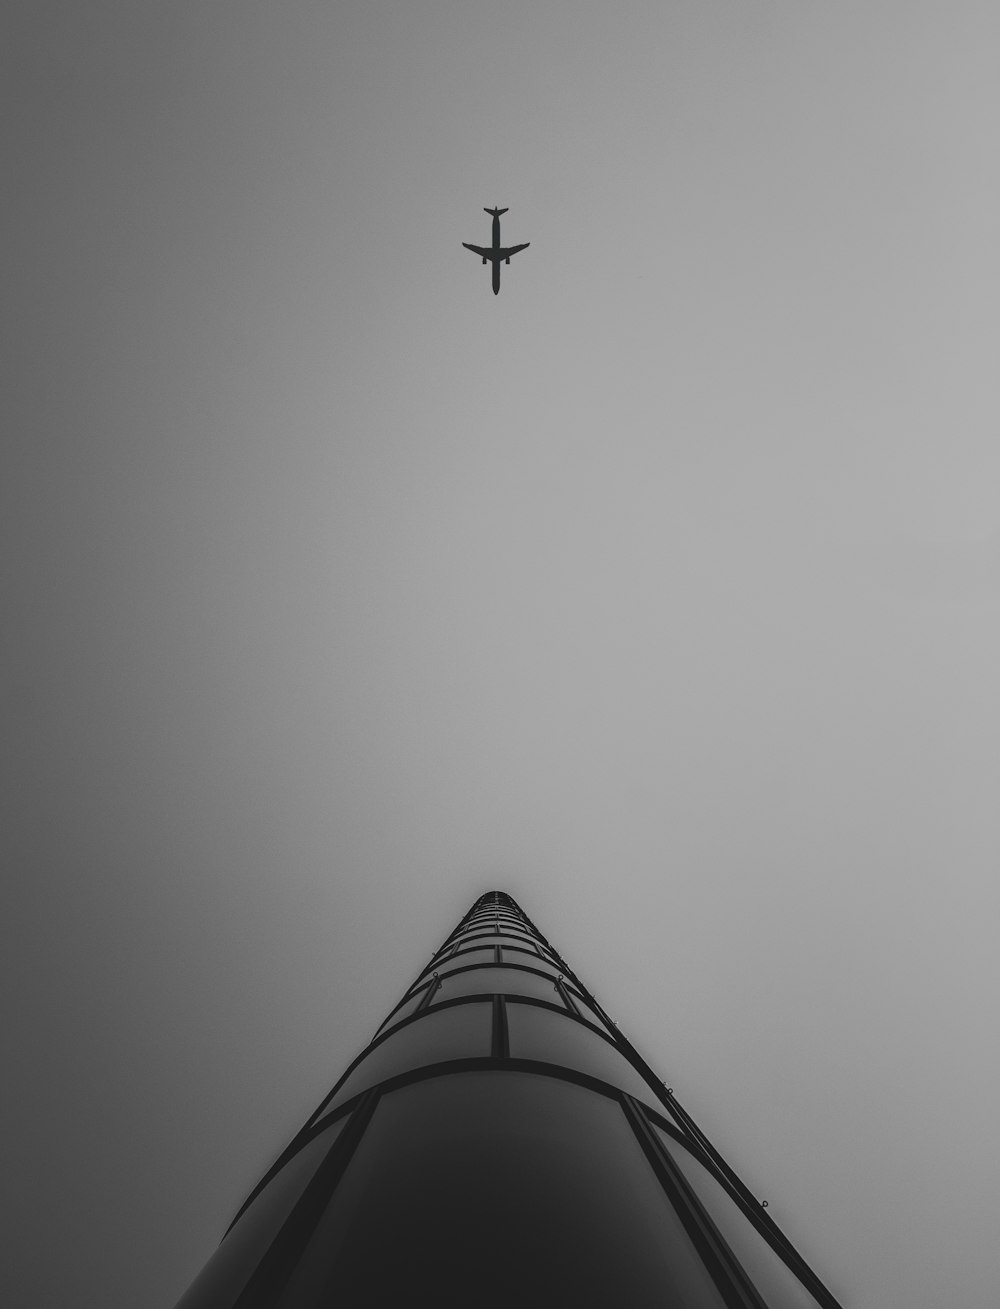 airliner in flight